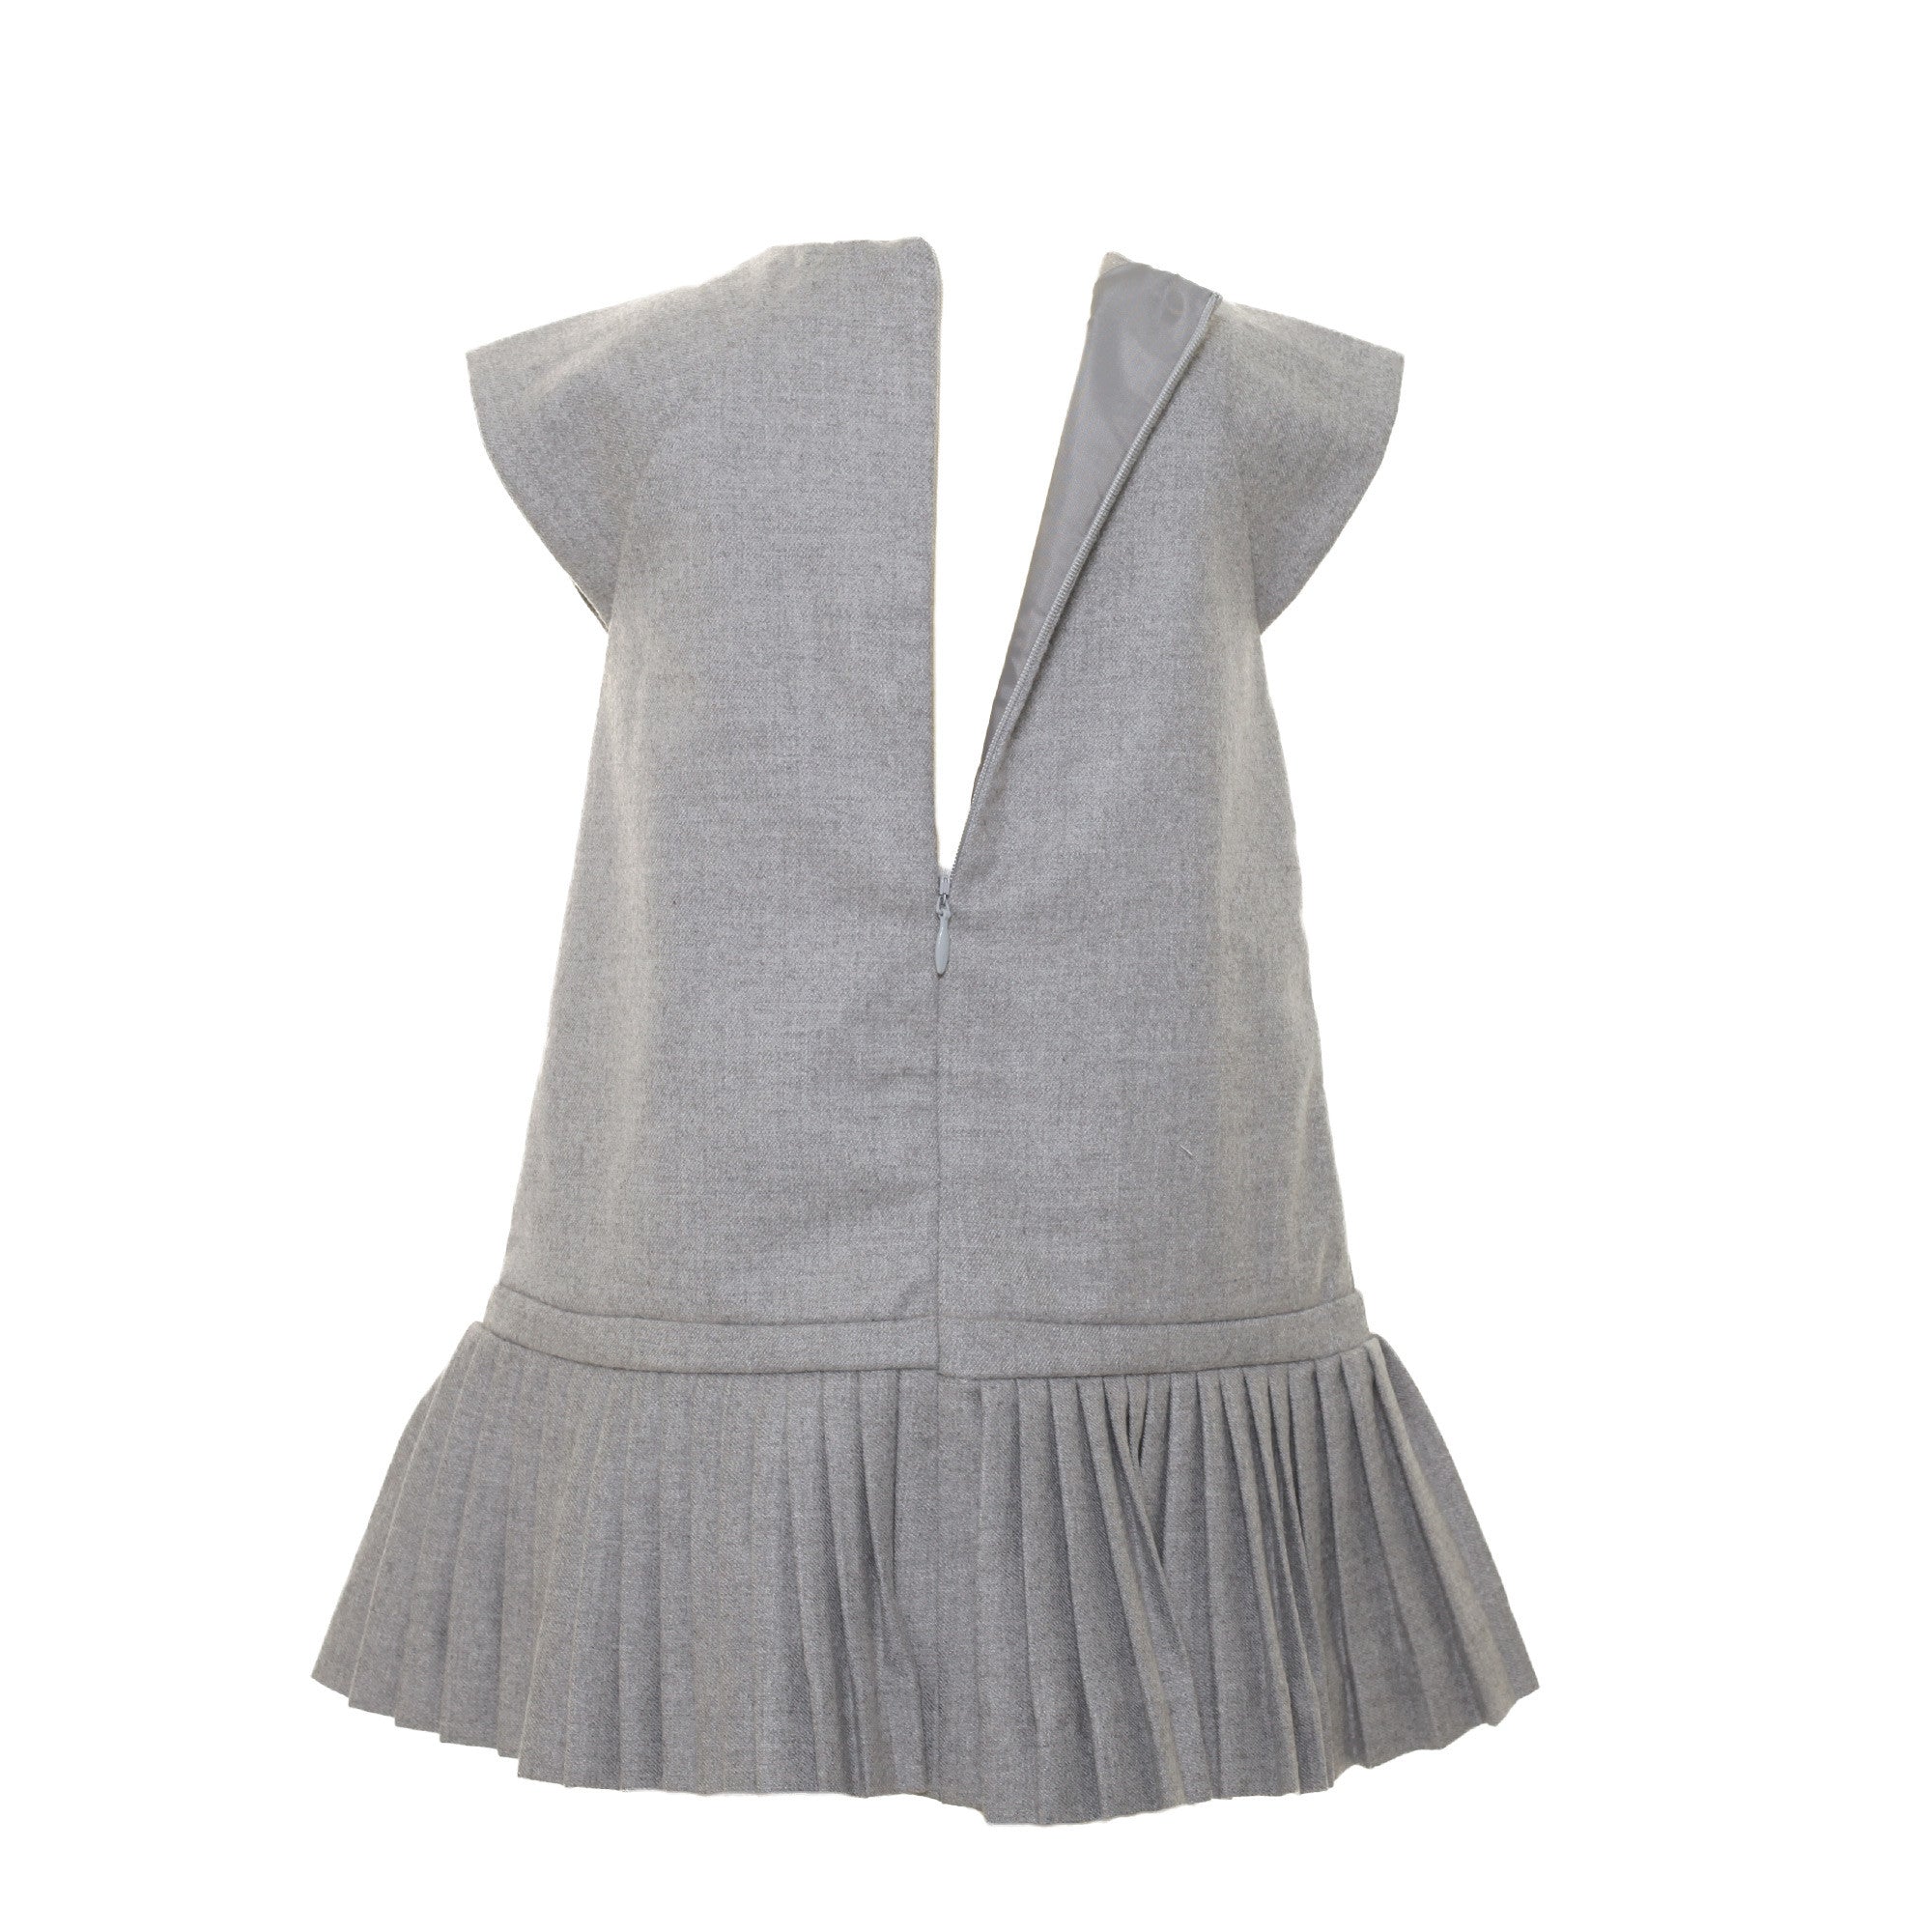 Baby Girls Dark Grey Dress With Bow Trims - CÉMAROSE | Children's Fashion Store - 2